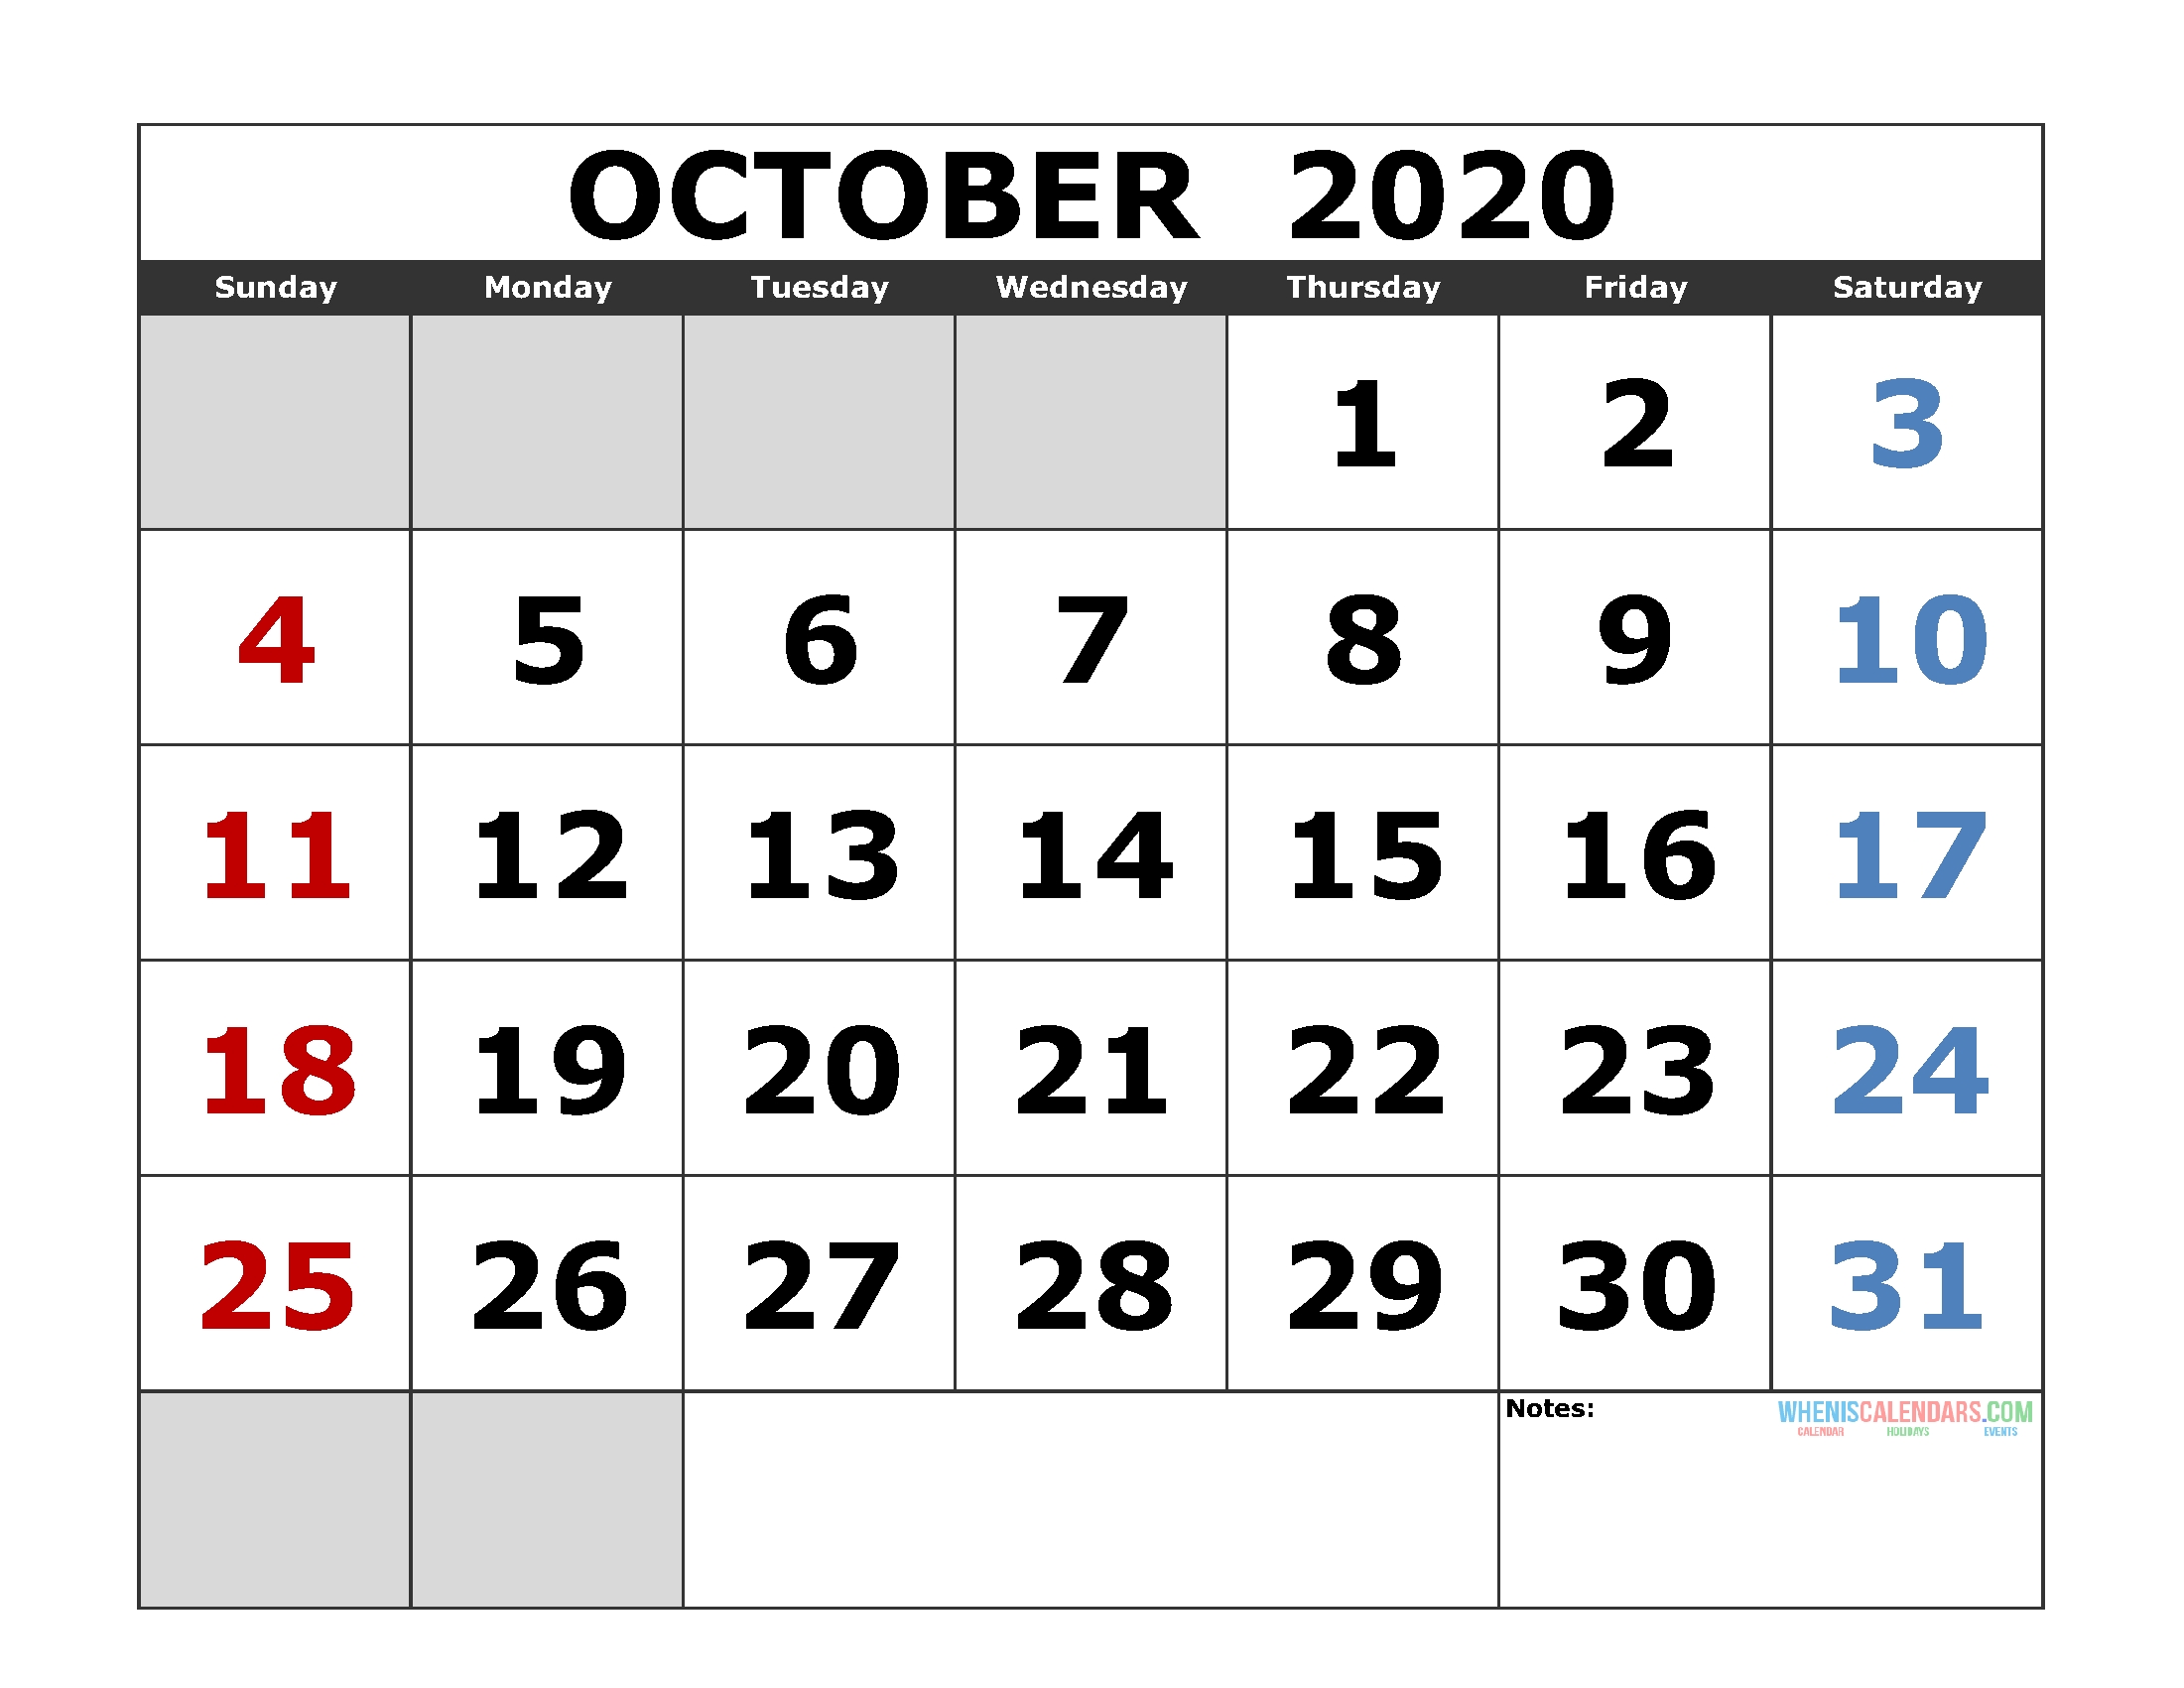 October 2020 Printable Calendar Template Excel, Pdf, Image-October 2020 Jewish Holidays Calendar